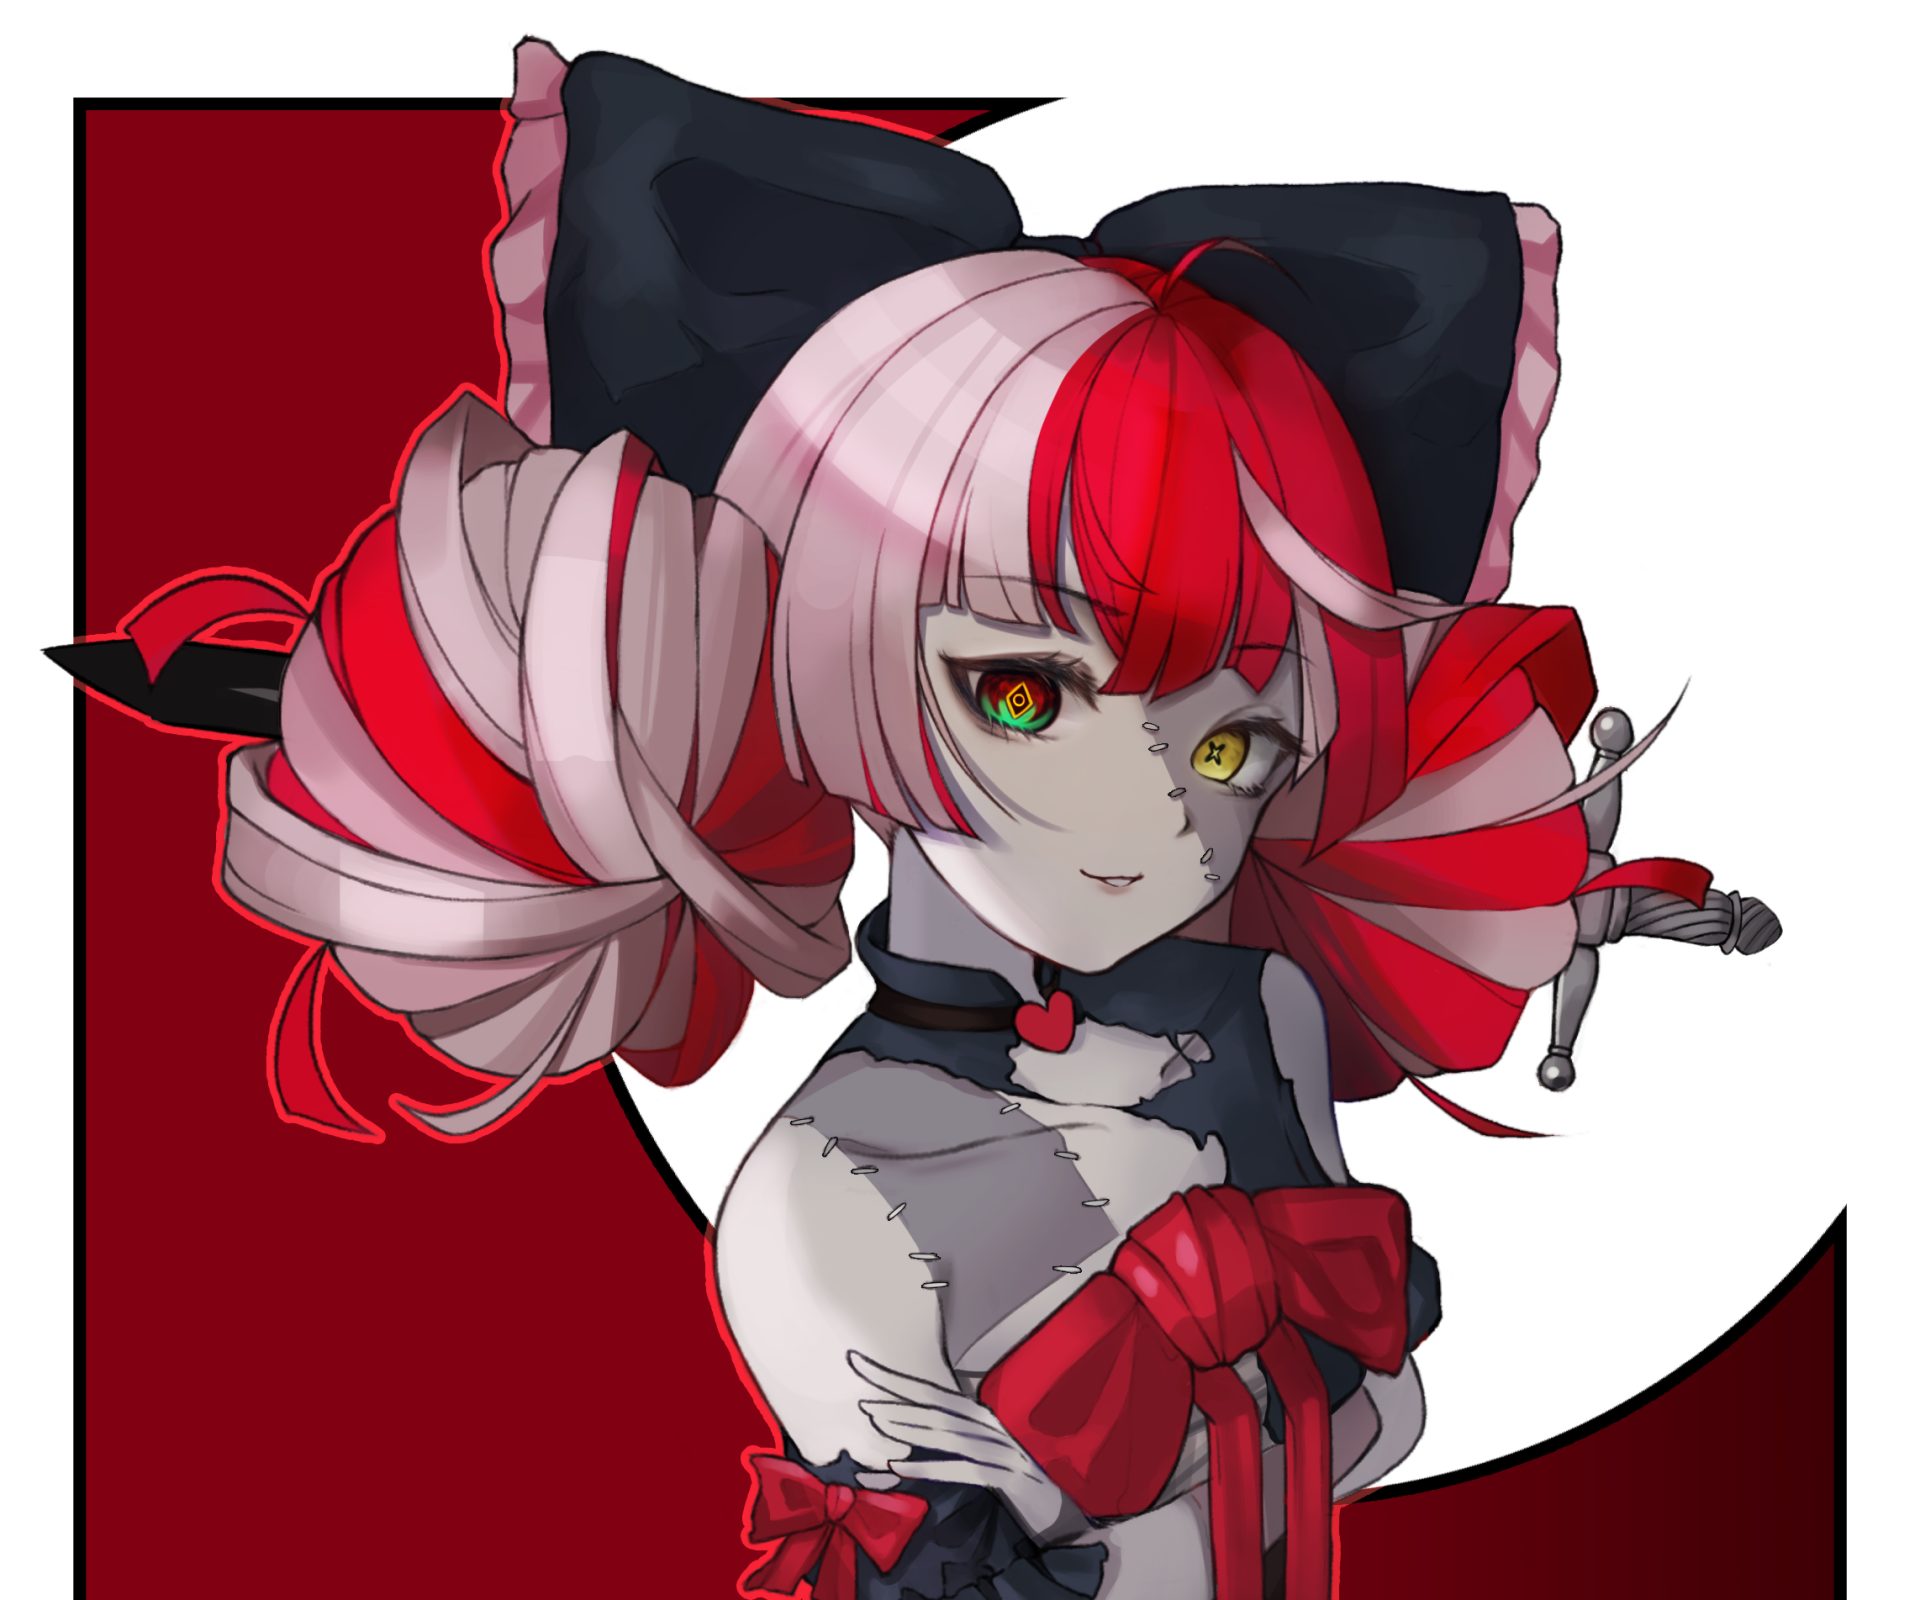 Virtual Youtuber Anime Anime Girls Heterochromia Looking At Viewer Arms Crossed Redhead Pink Hair Ku 1920x1600